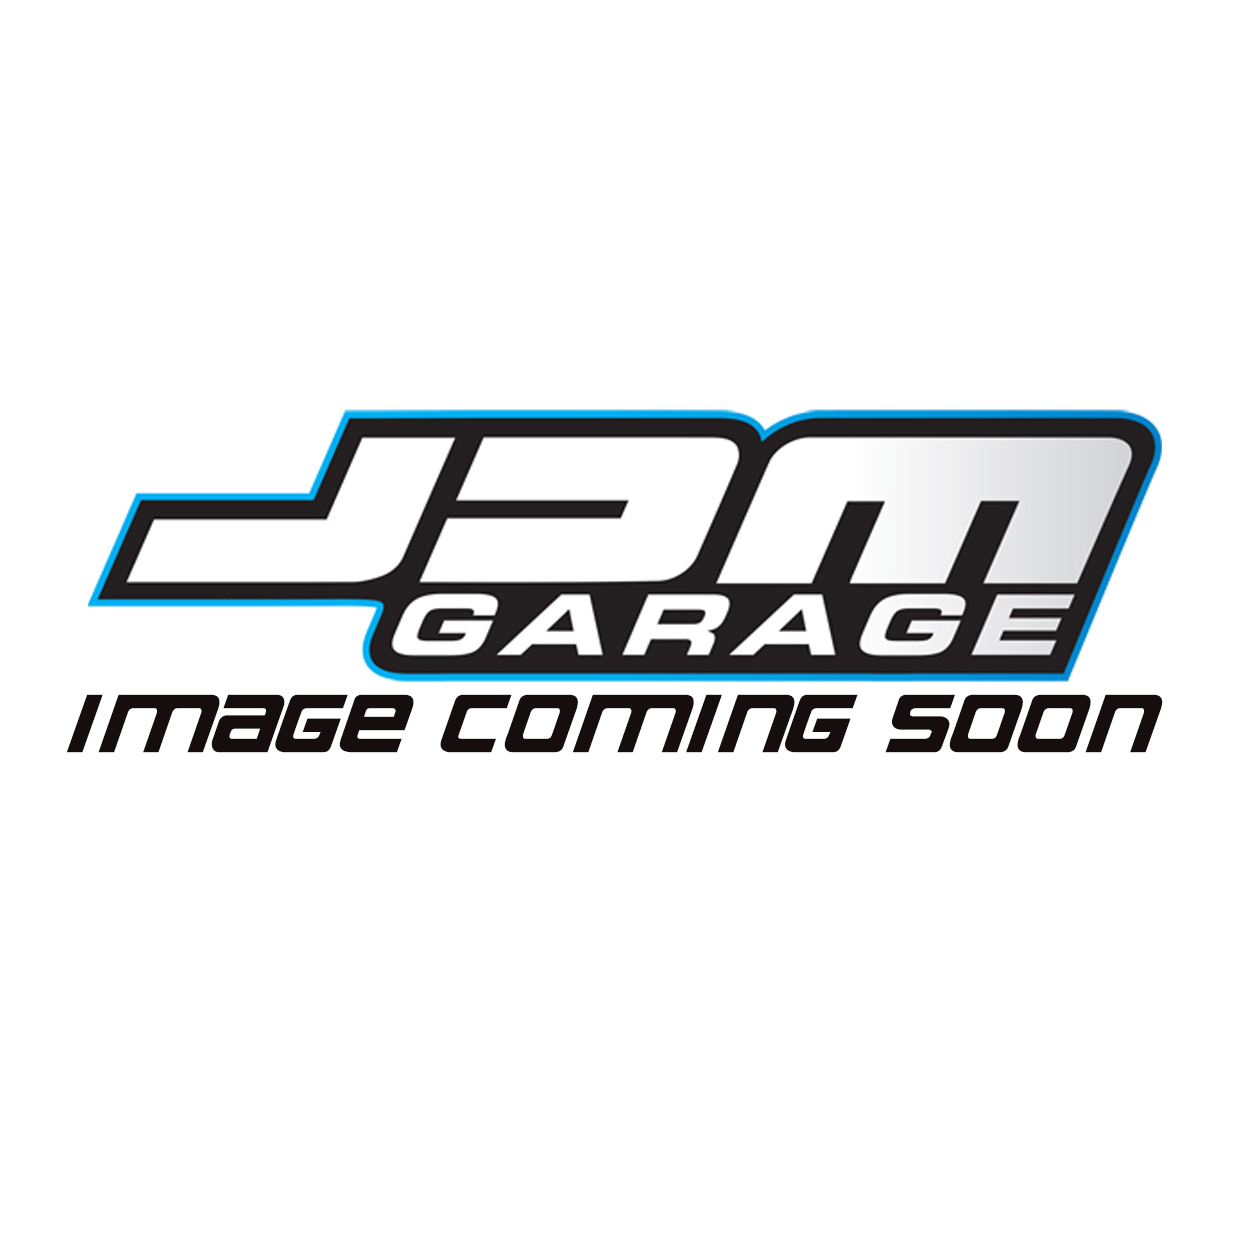 JdmGarageUK SR20DET Original Position Bottom Mount Manifold Silvia S13 180SX S14 200SX S15 SpecR T25 / T28